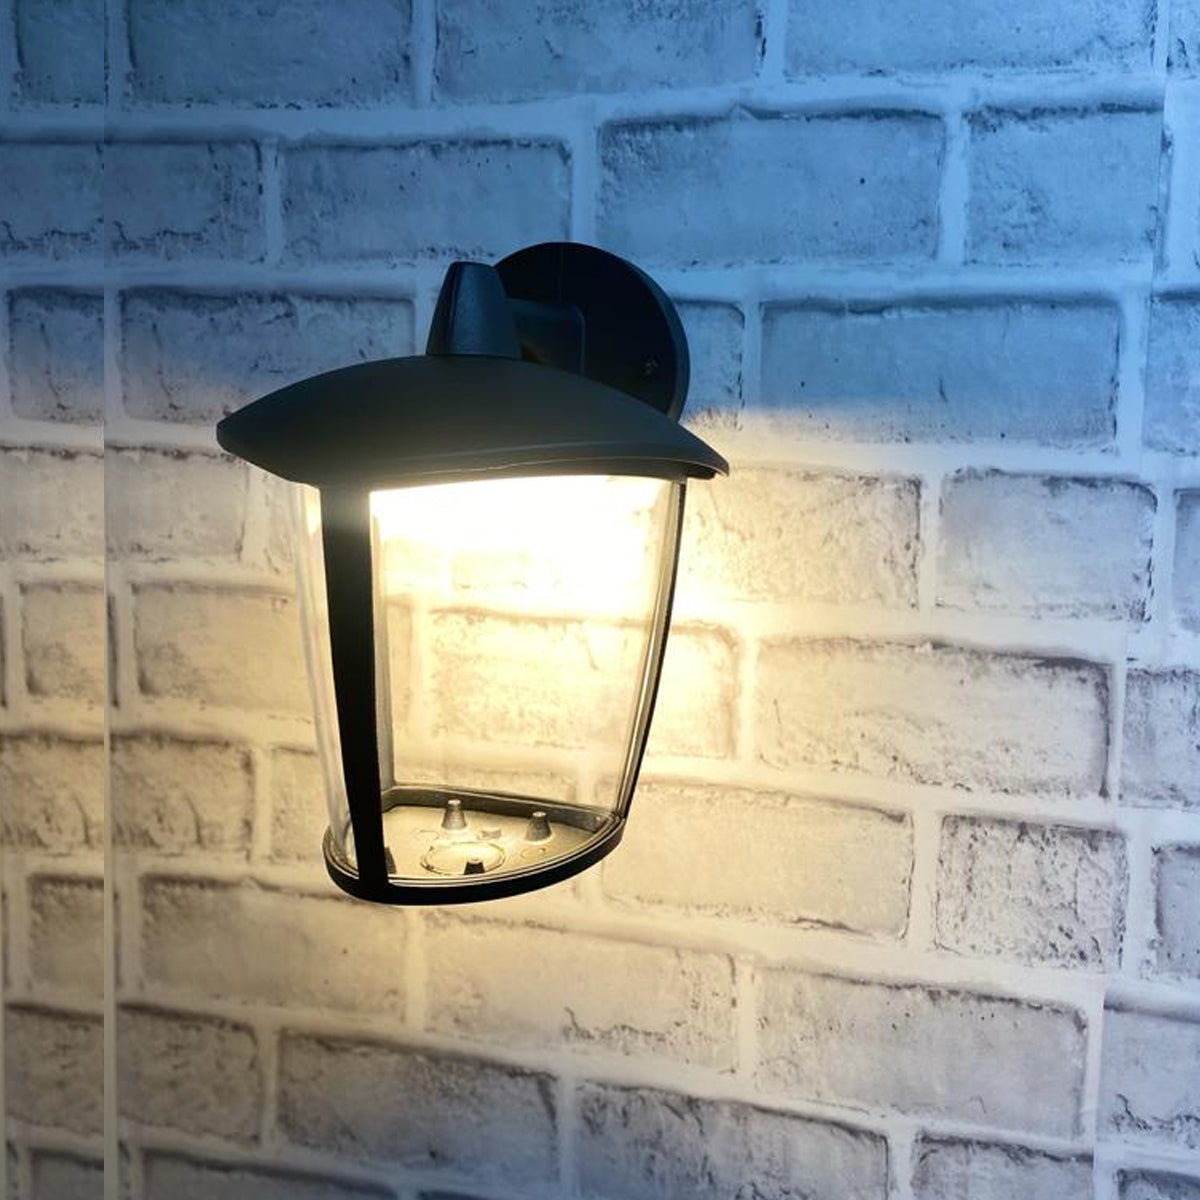 PYRAMID - CGC Black LED Wall Lantern Light